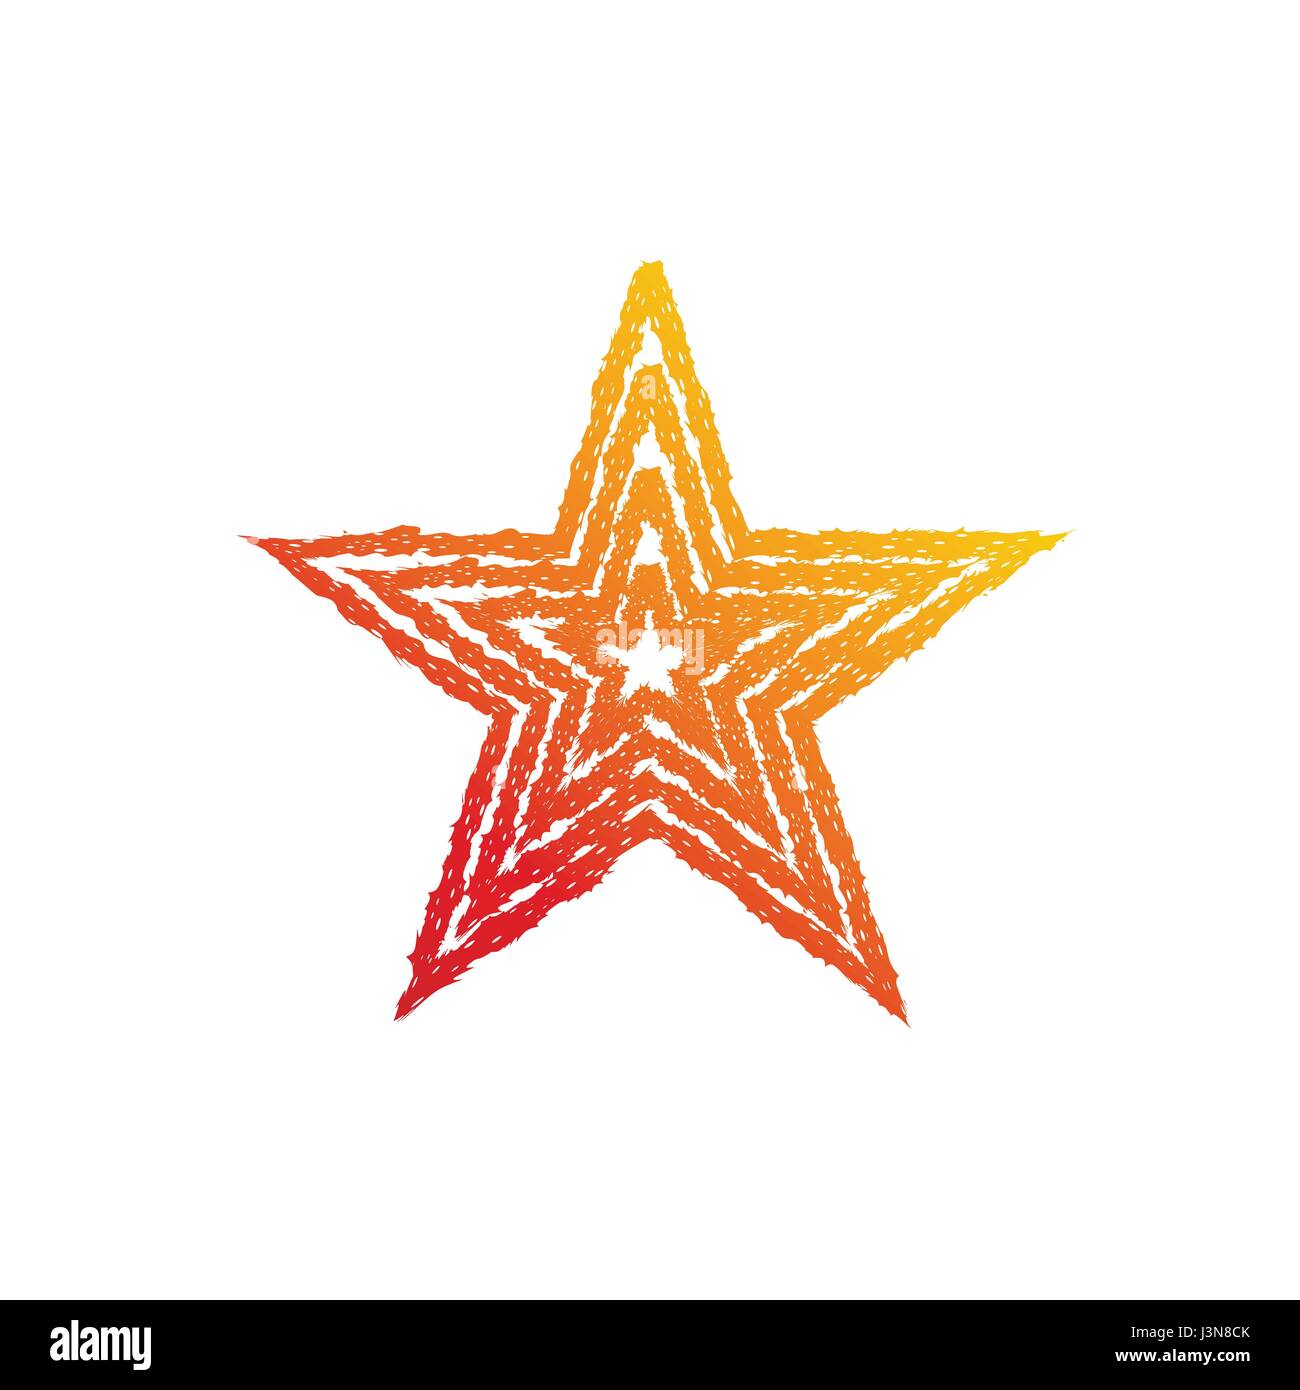 Fire star symbol Stock Vector